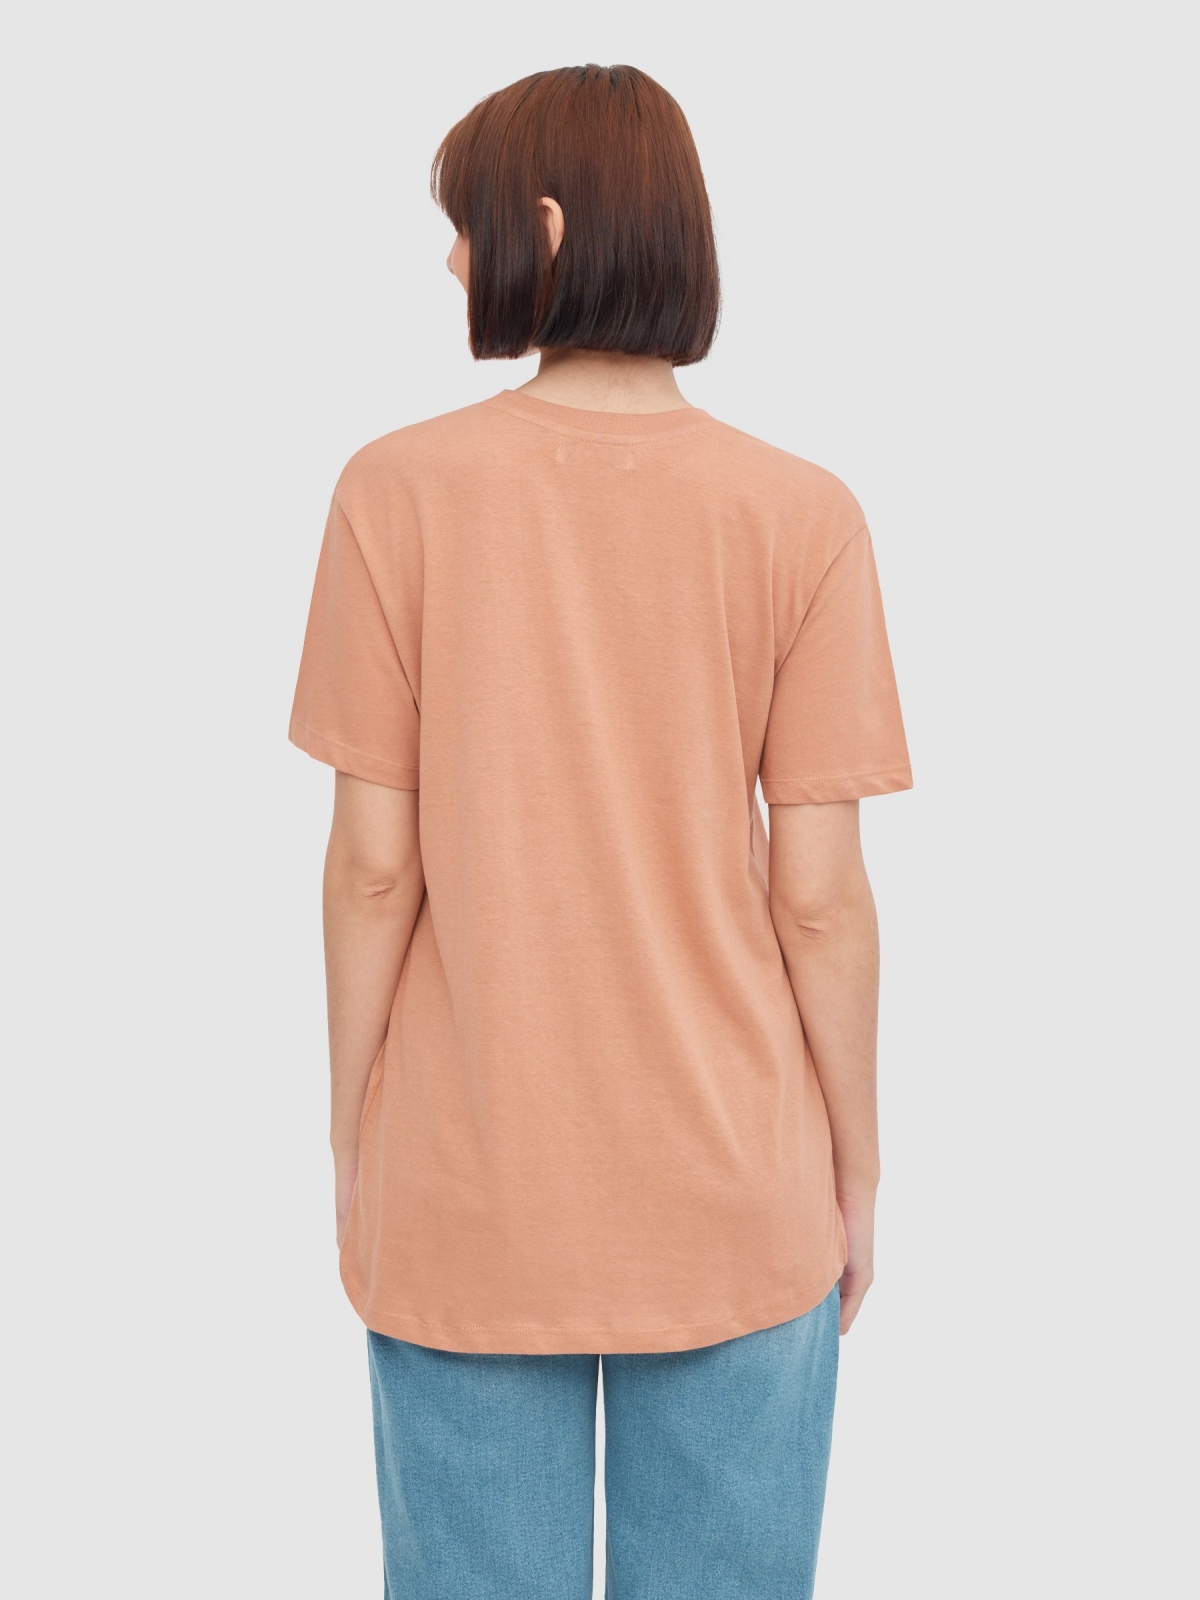 Camiseta oversize Travel marrón claro vista media trasera